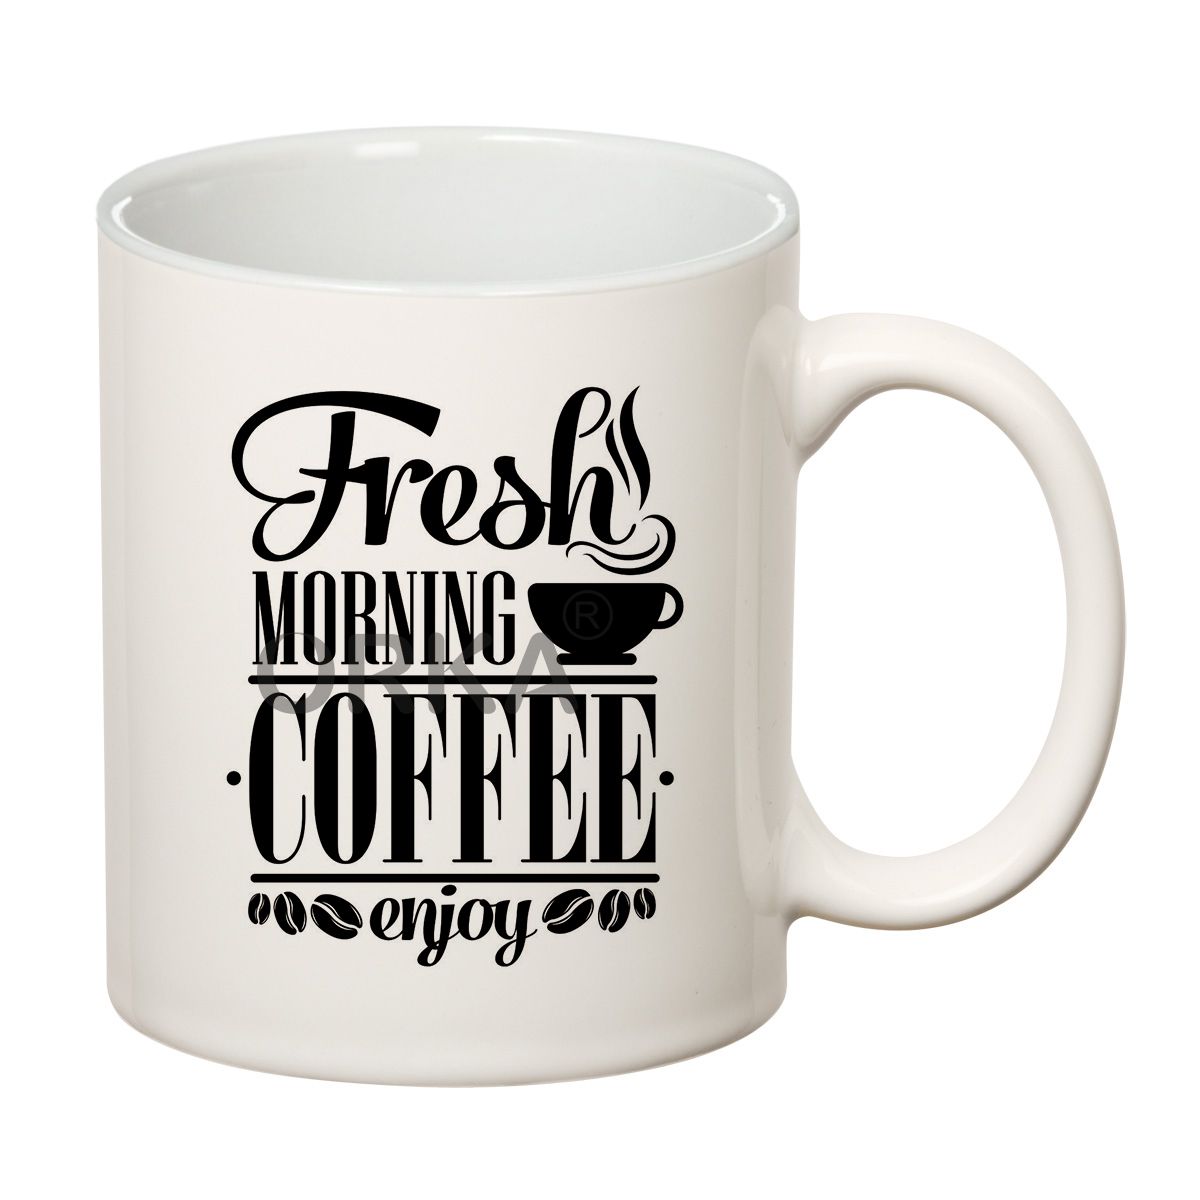 ORKA Coffee Mug Quotes Printed(Fresh Morning Coffee) Theme 11 Oz   